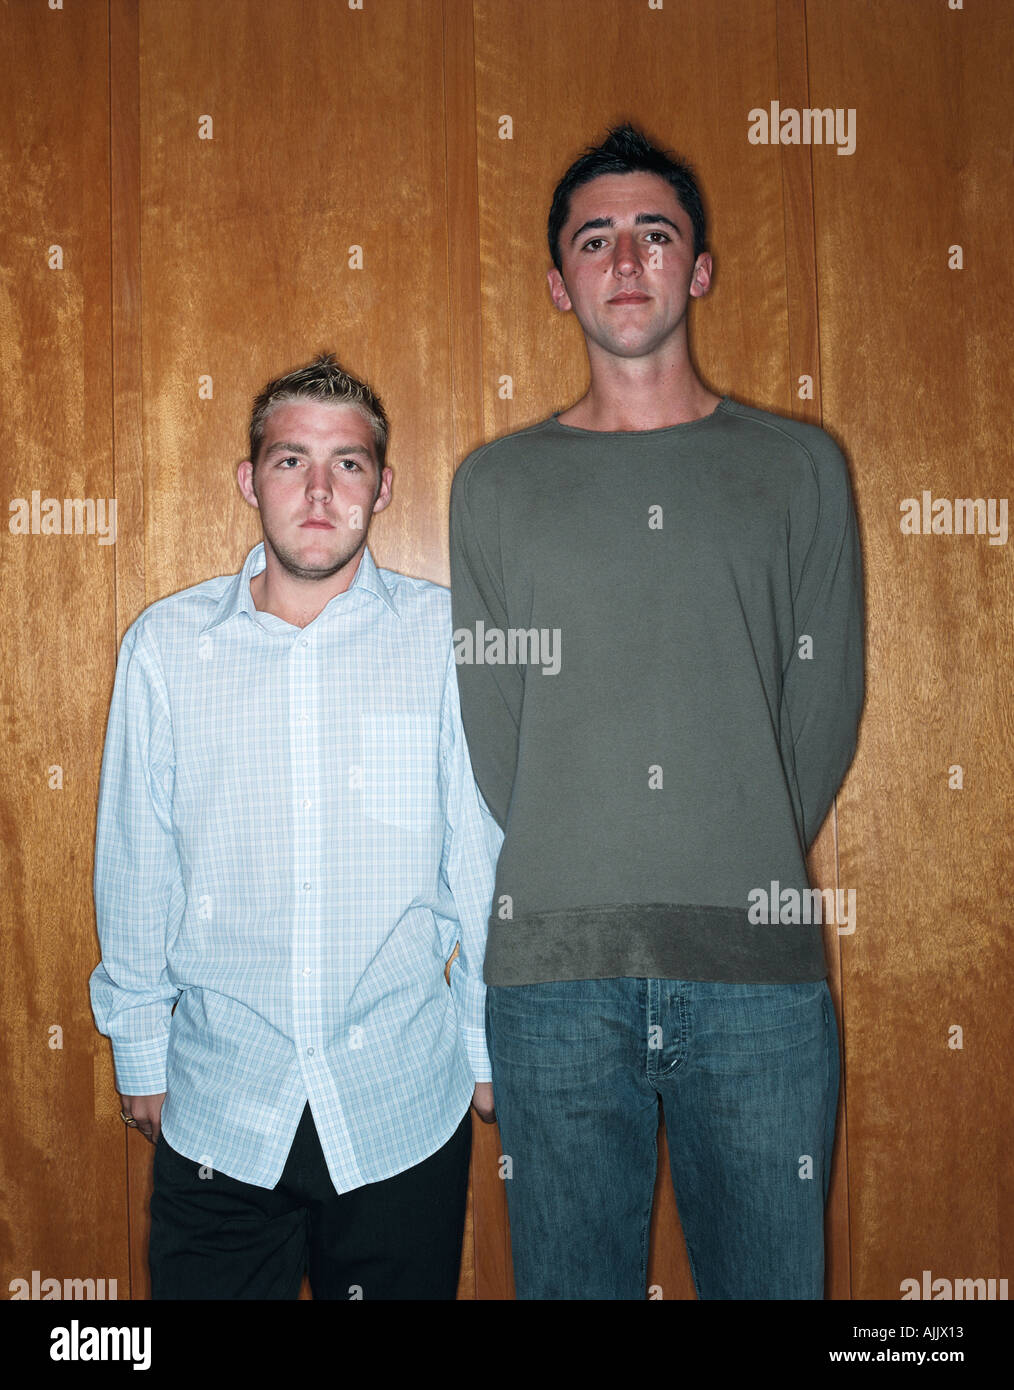 Man really tall Tallest Men